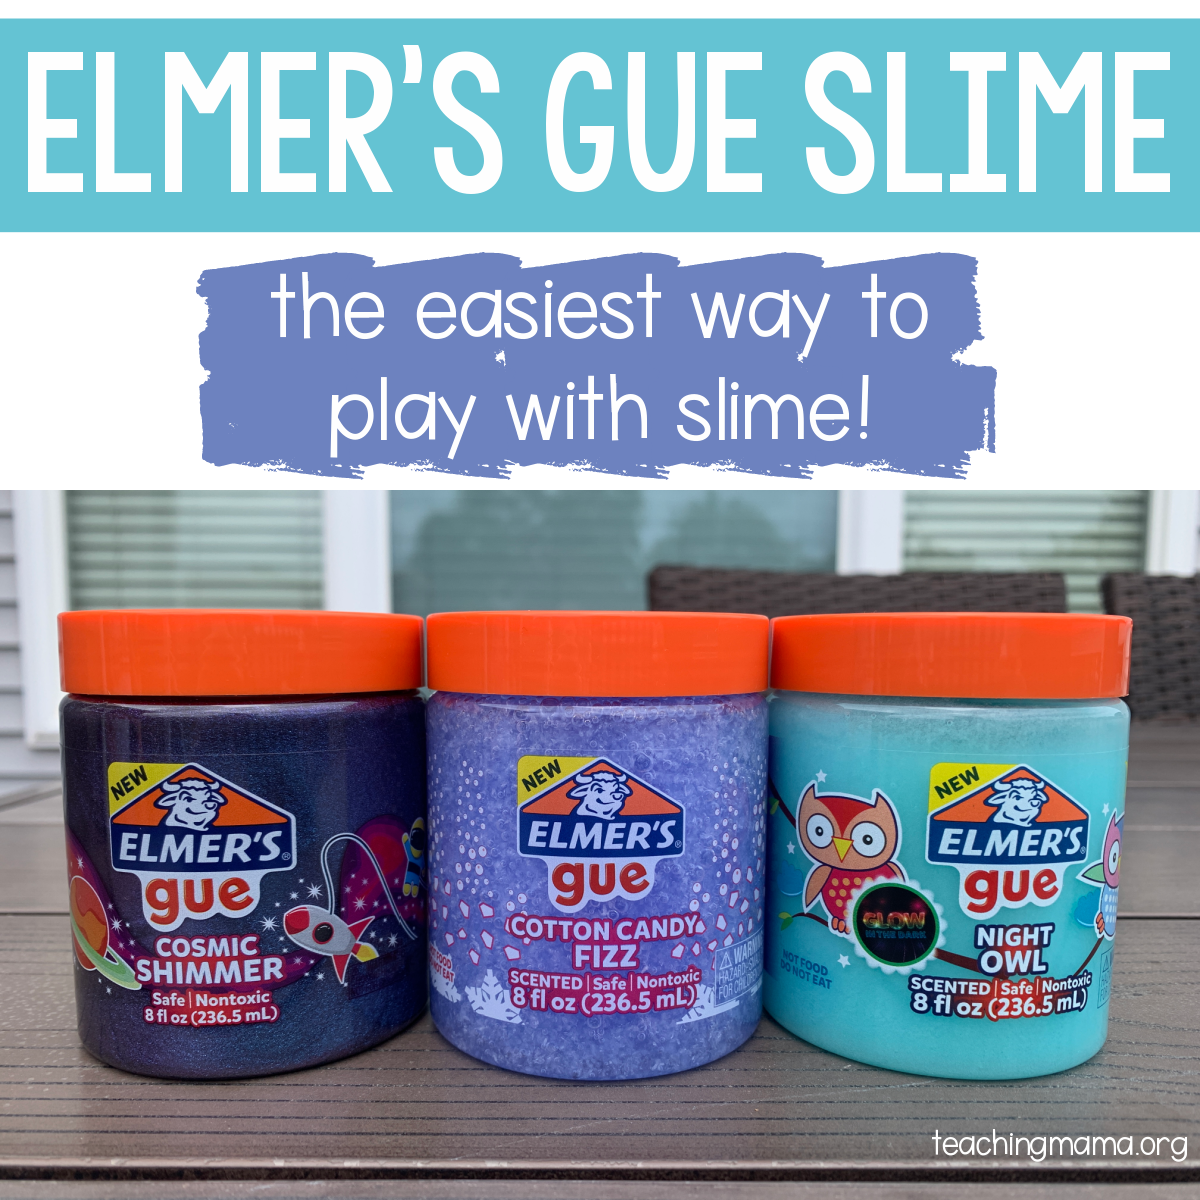 NEW SLIMES!!! NEW Elmer's Gue SLIMES!!! 